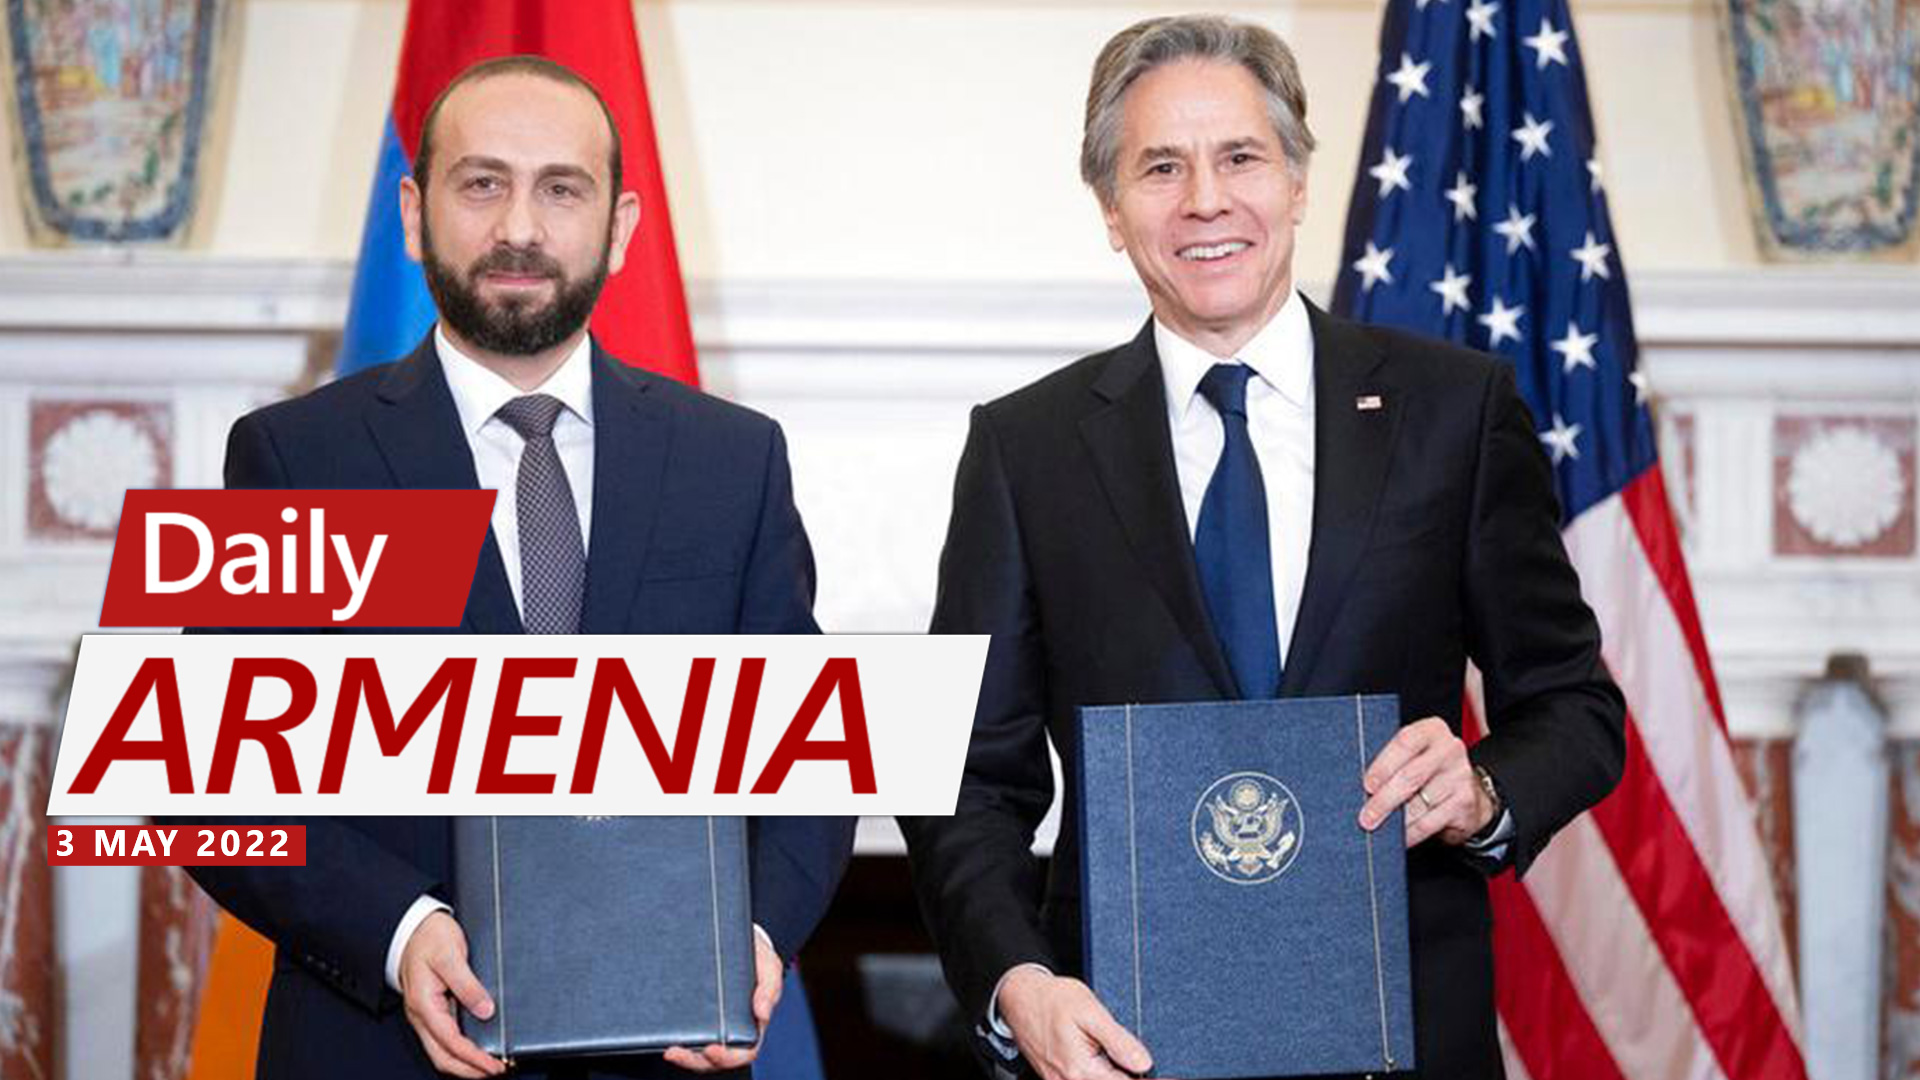 Armenia’s foreign minister meets Blinken in Washington